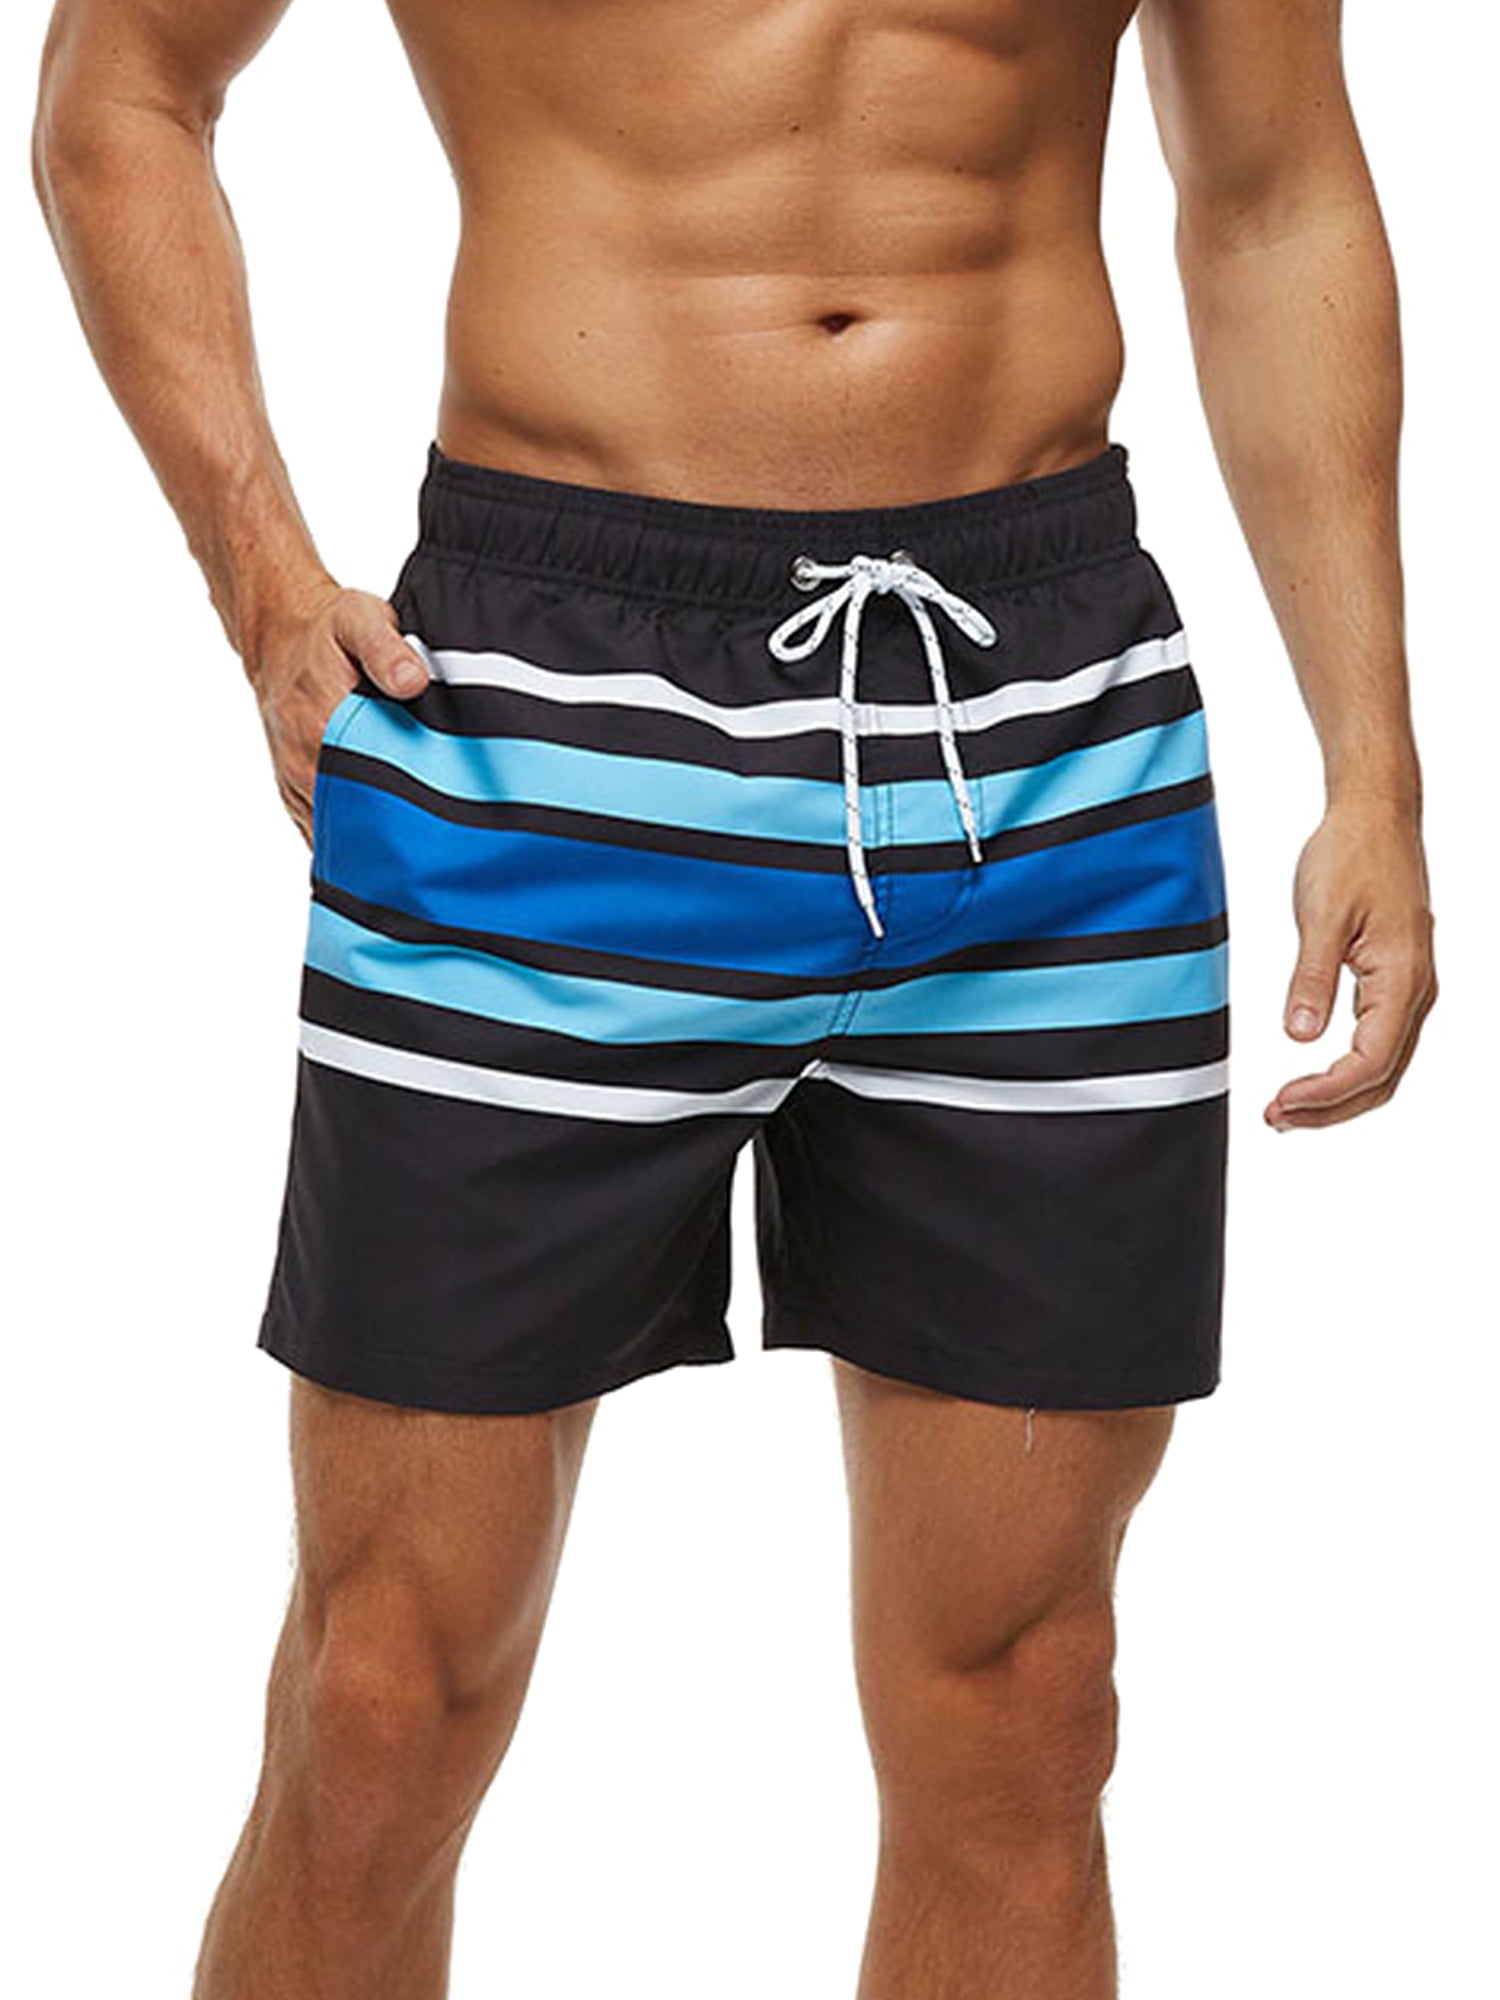 Men's Swim Trunks Fast Dry Swimsuits Beach Board Shorts Beachwear Shorts for Men